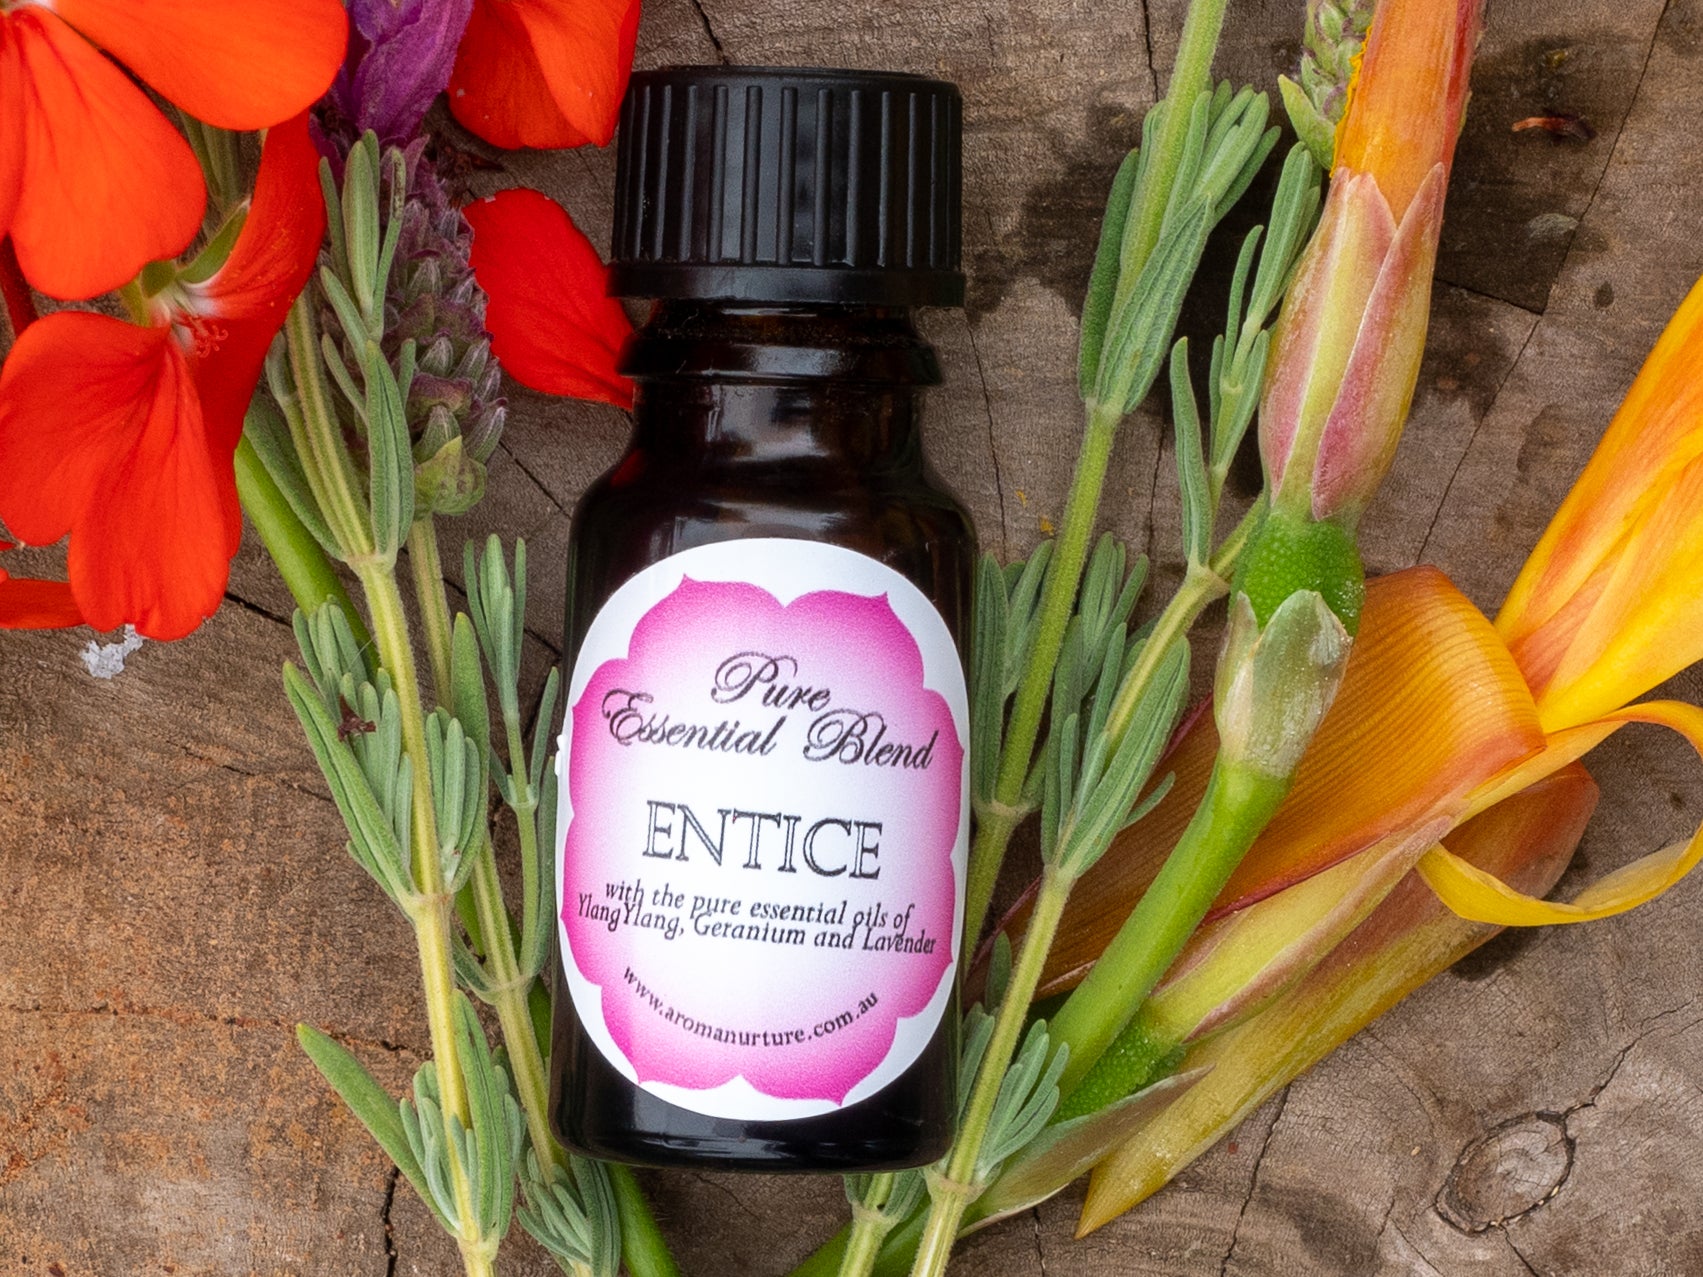 ENTICE Pure essential oil blend